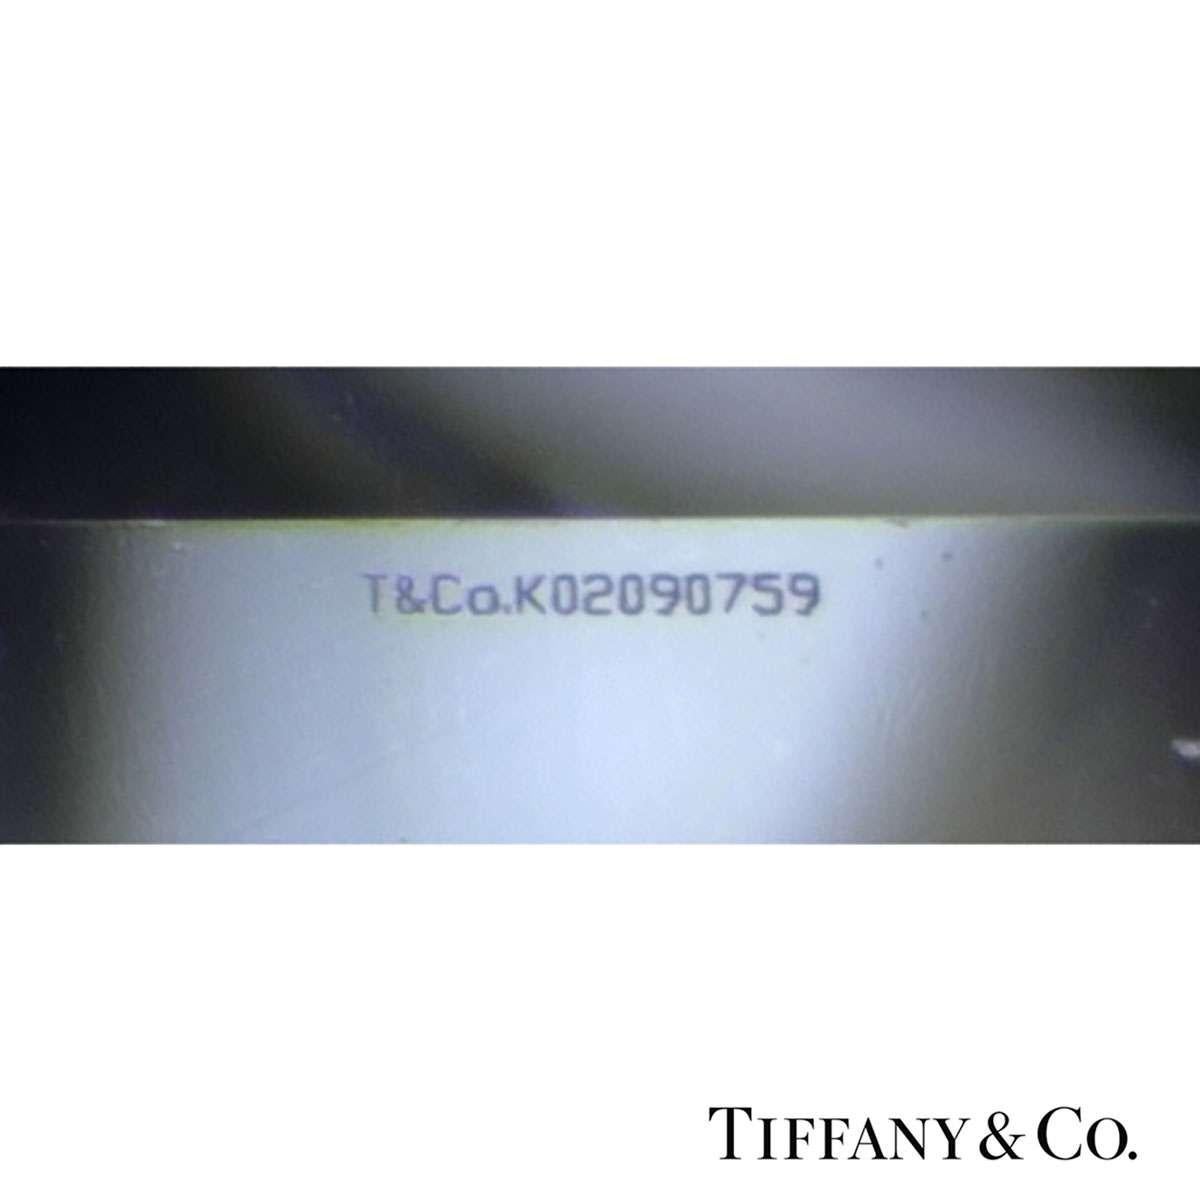 Mixed Cut Tiffany & Co. Lucida Cut Diamond Ring 1.24 Carat